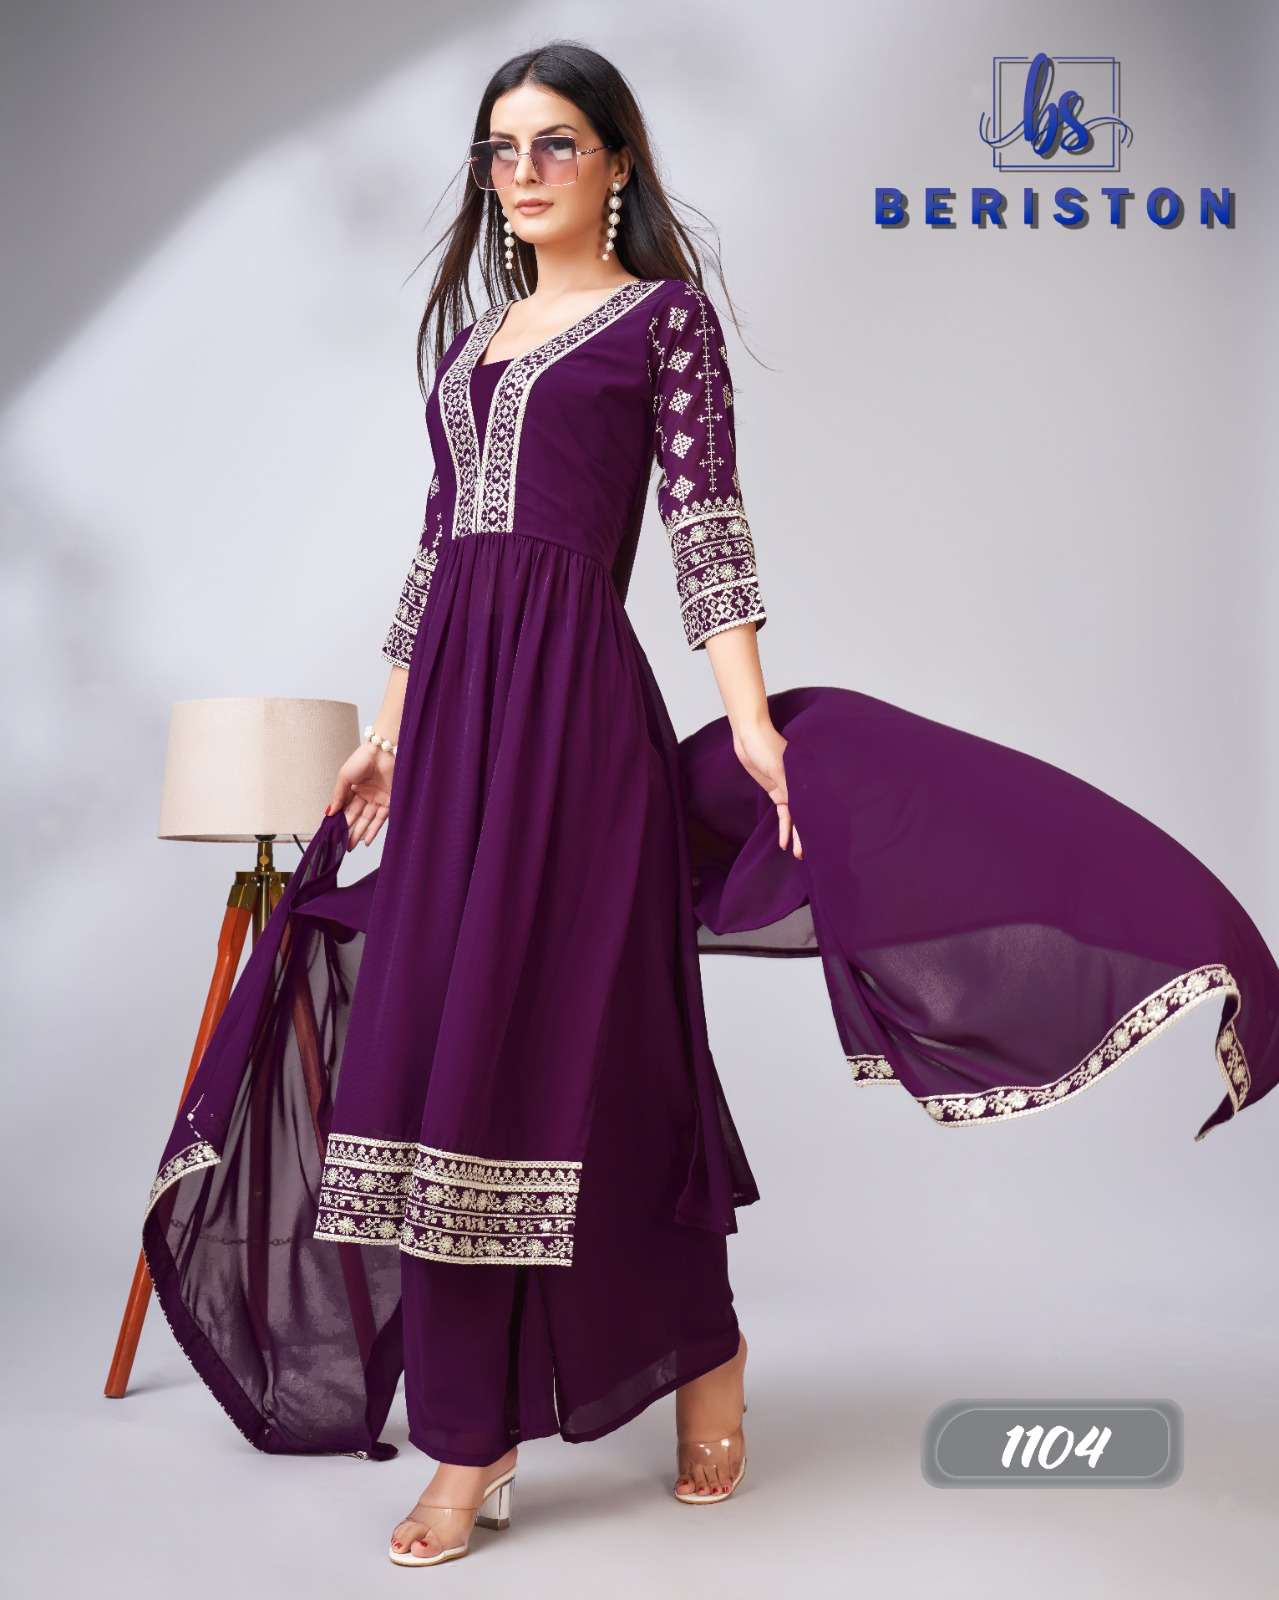 beriston bs vol 11 georgette elegant top bottom with dupatta catalog